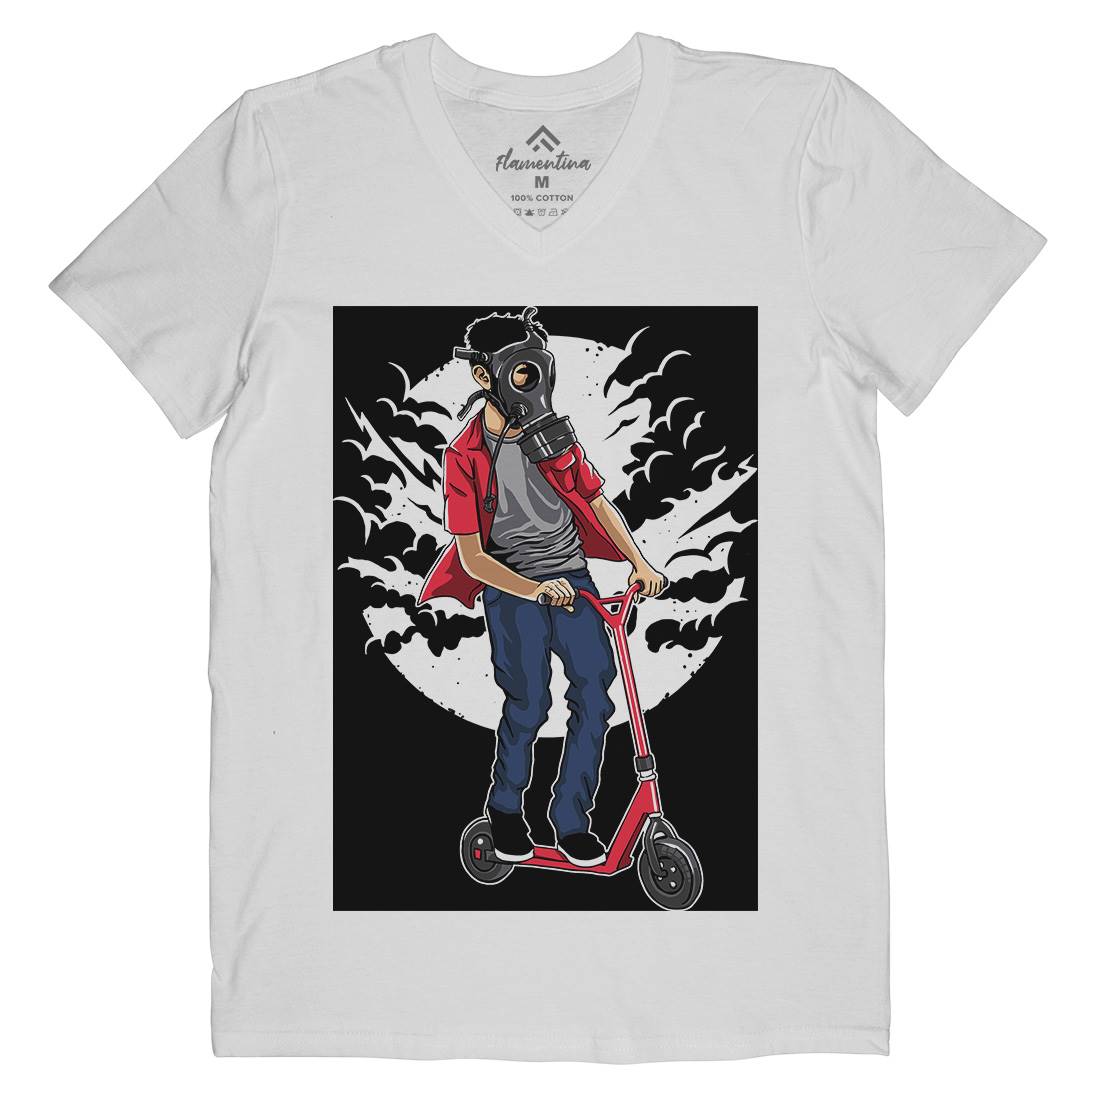 Mask Rider Mens V-Neck T-Shirt Horror A540